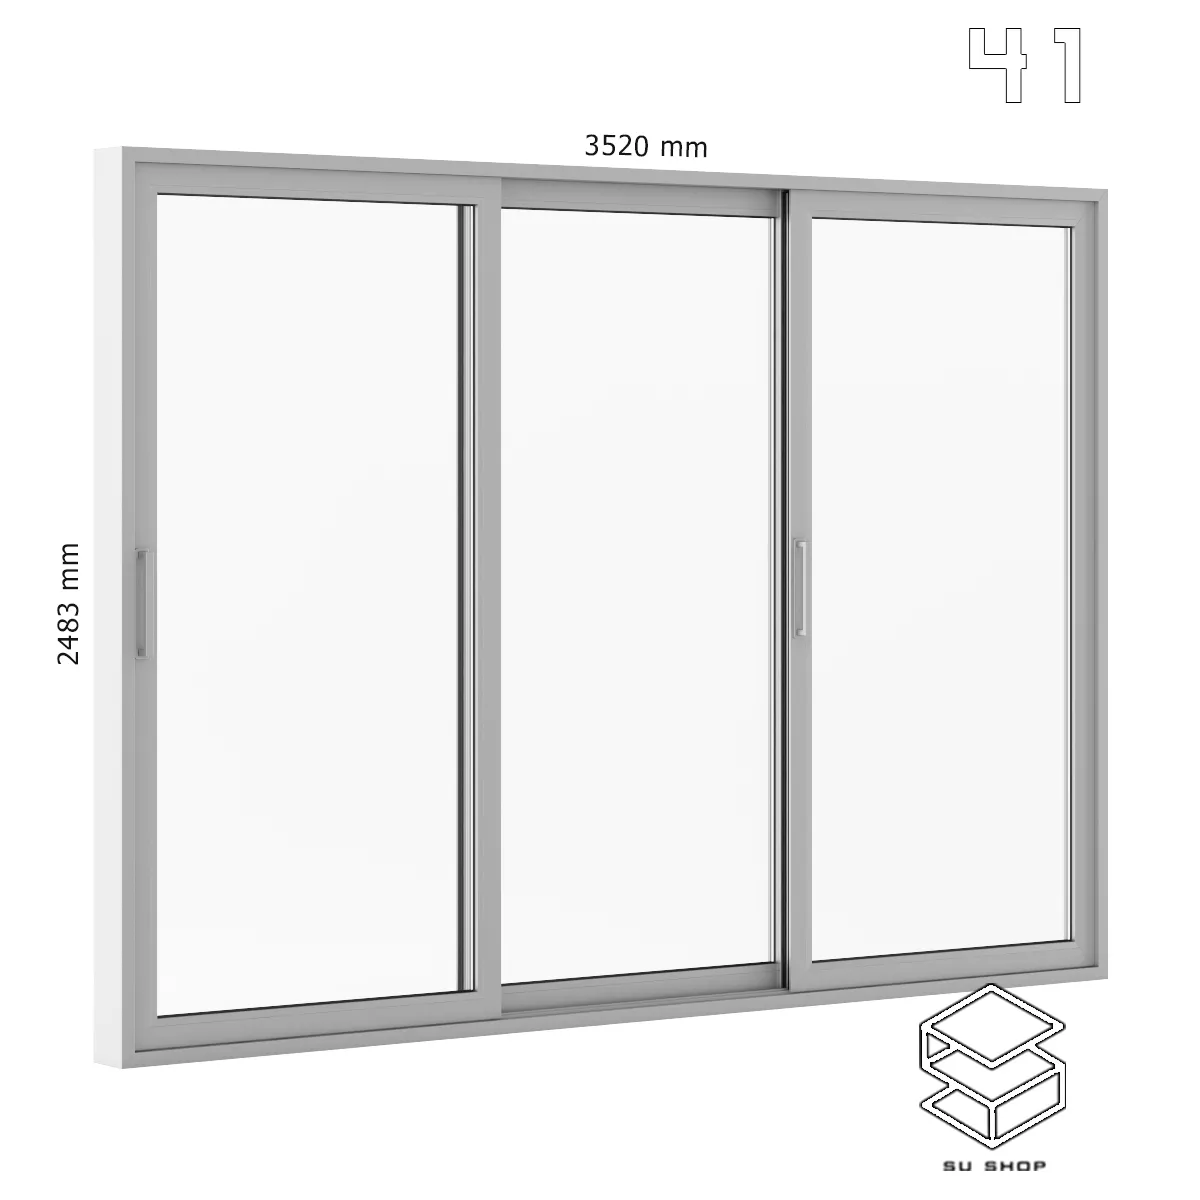 MODERN WINDOWS - SKETCHUP 3D MODEL - VRAY OR ENSCAPE - ID16783